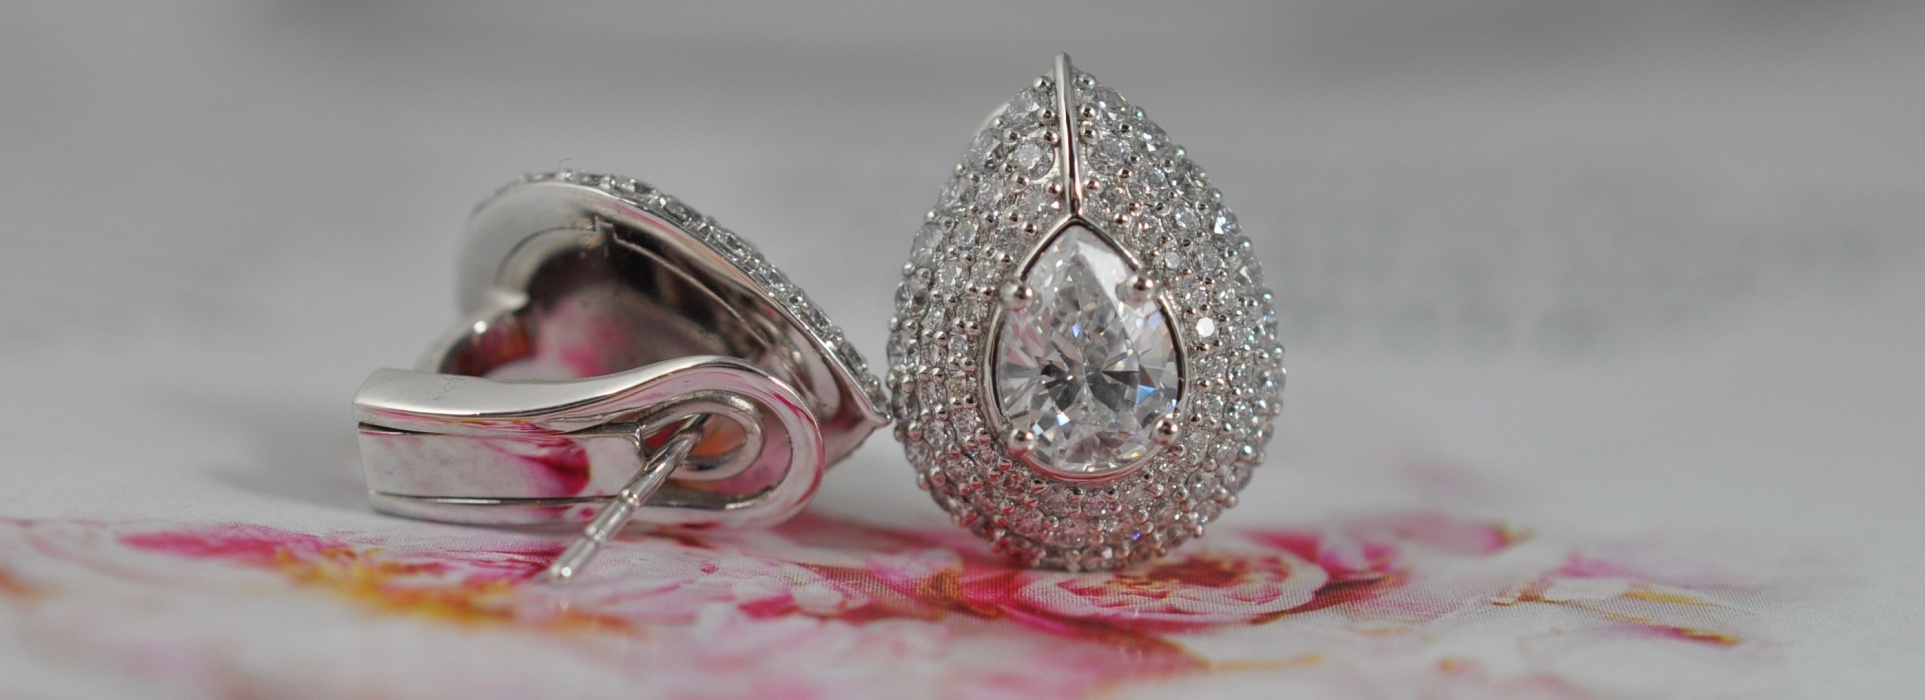 Boston Diamond Studio - Trusted Boston Jewelry Designer